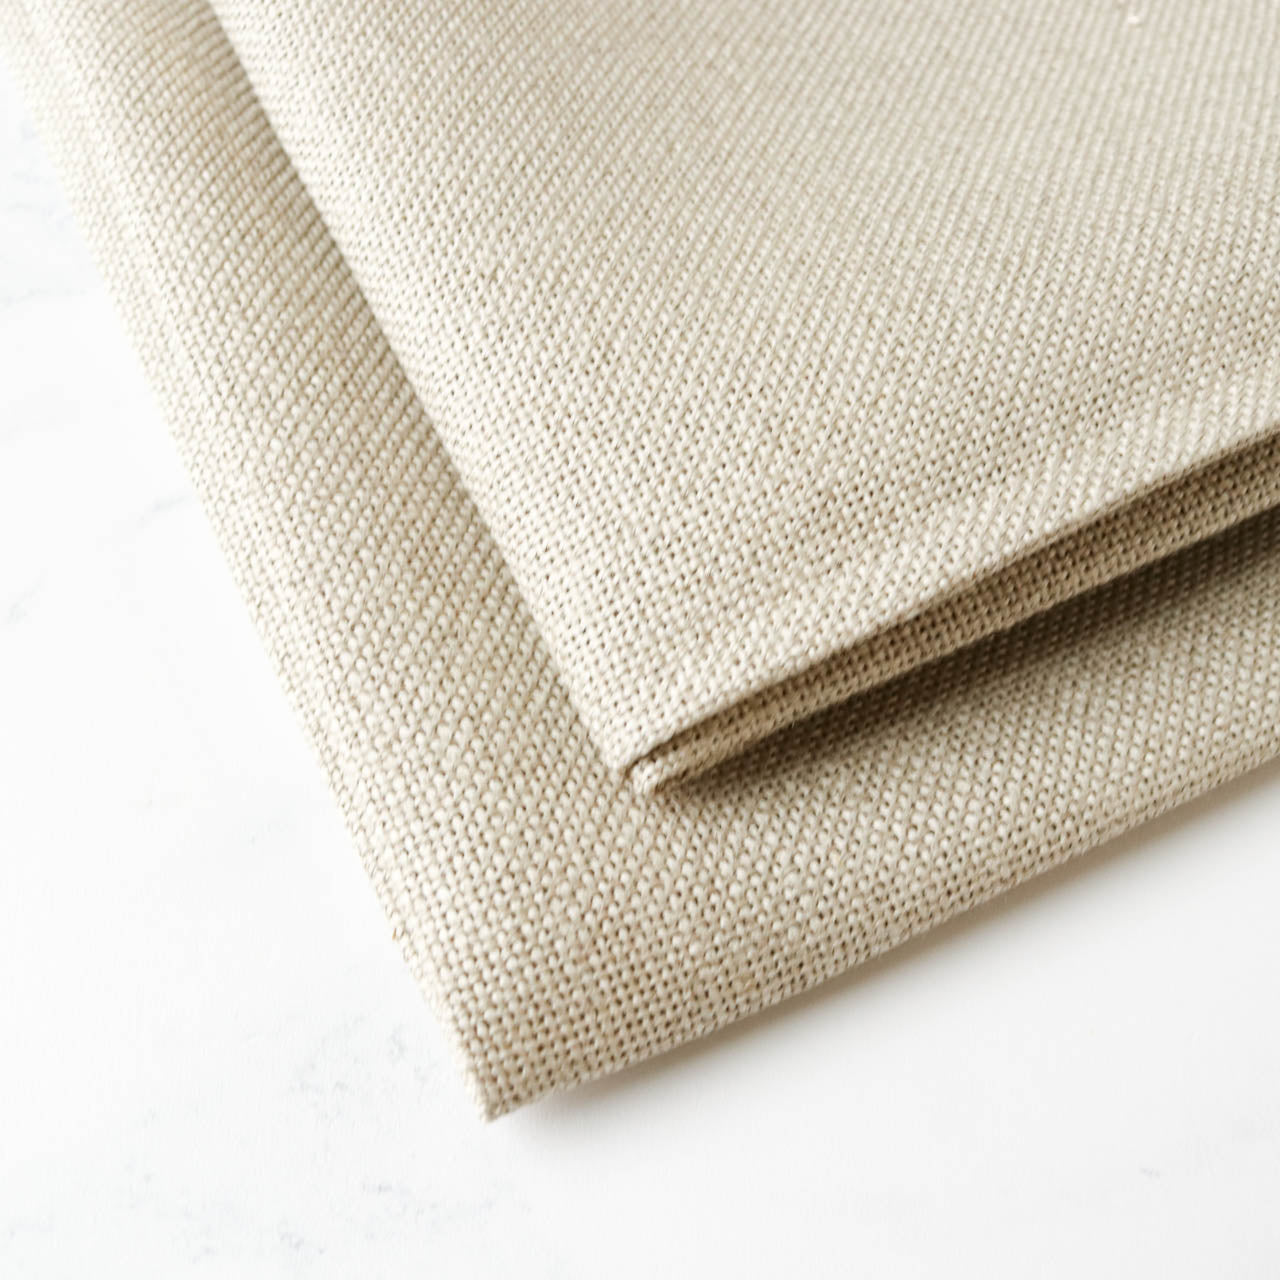 20-count Cork Linen Cross Stitch Fabric - Natural/Raw - Stitched Modern